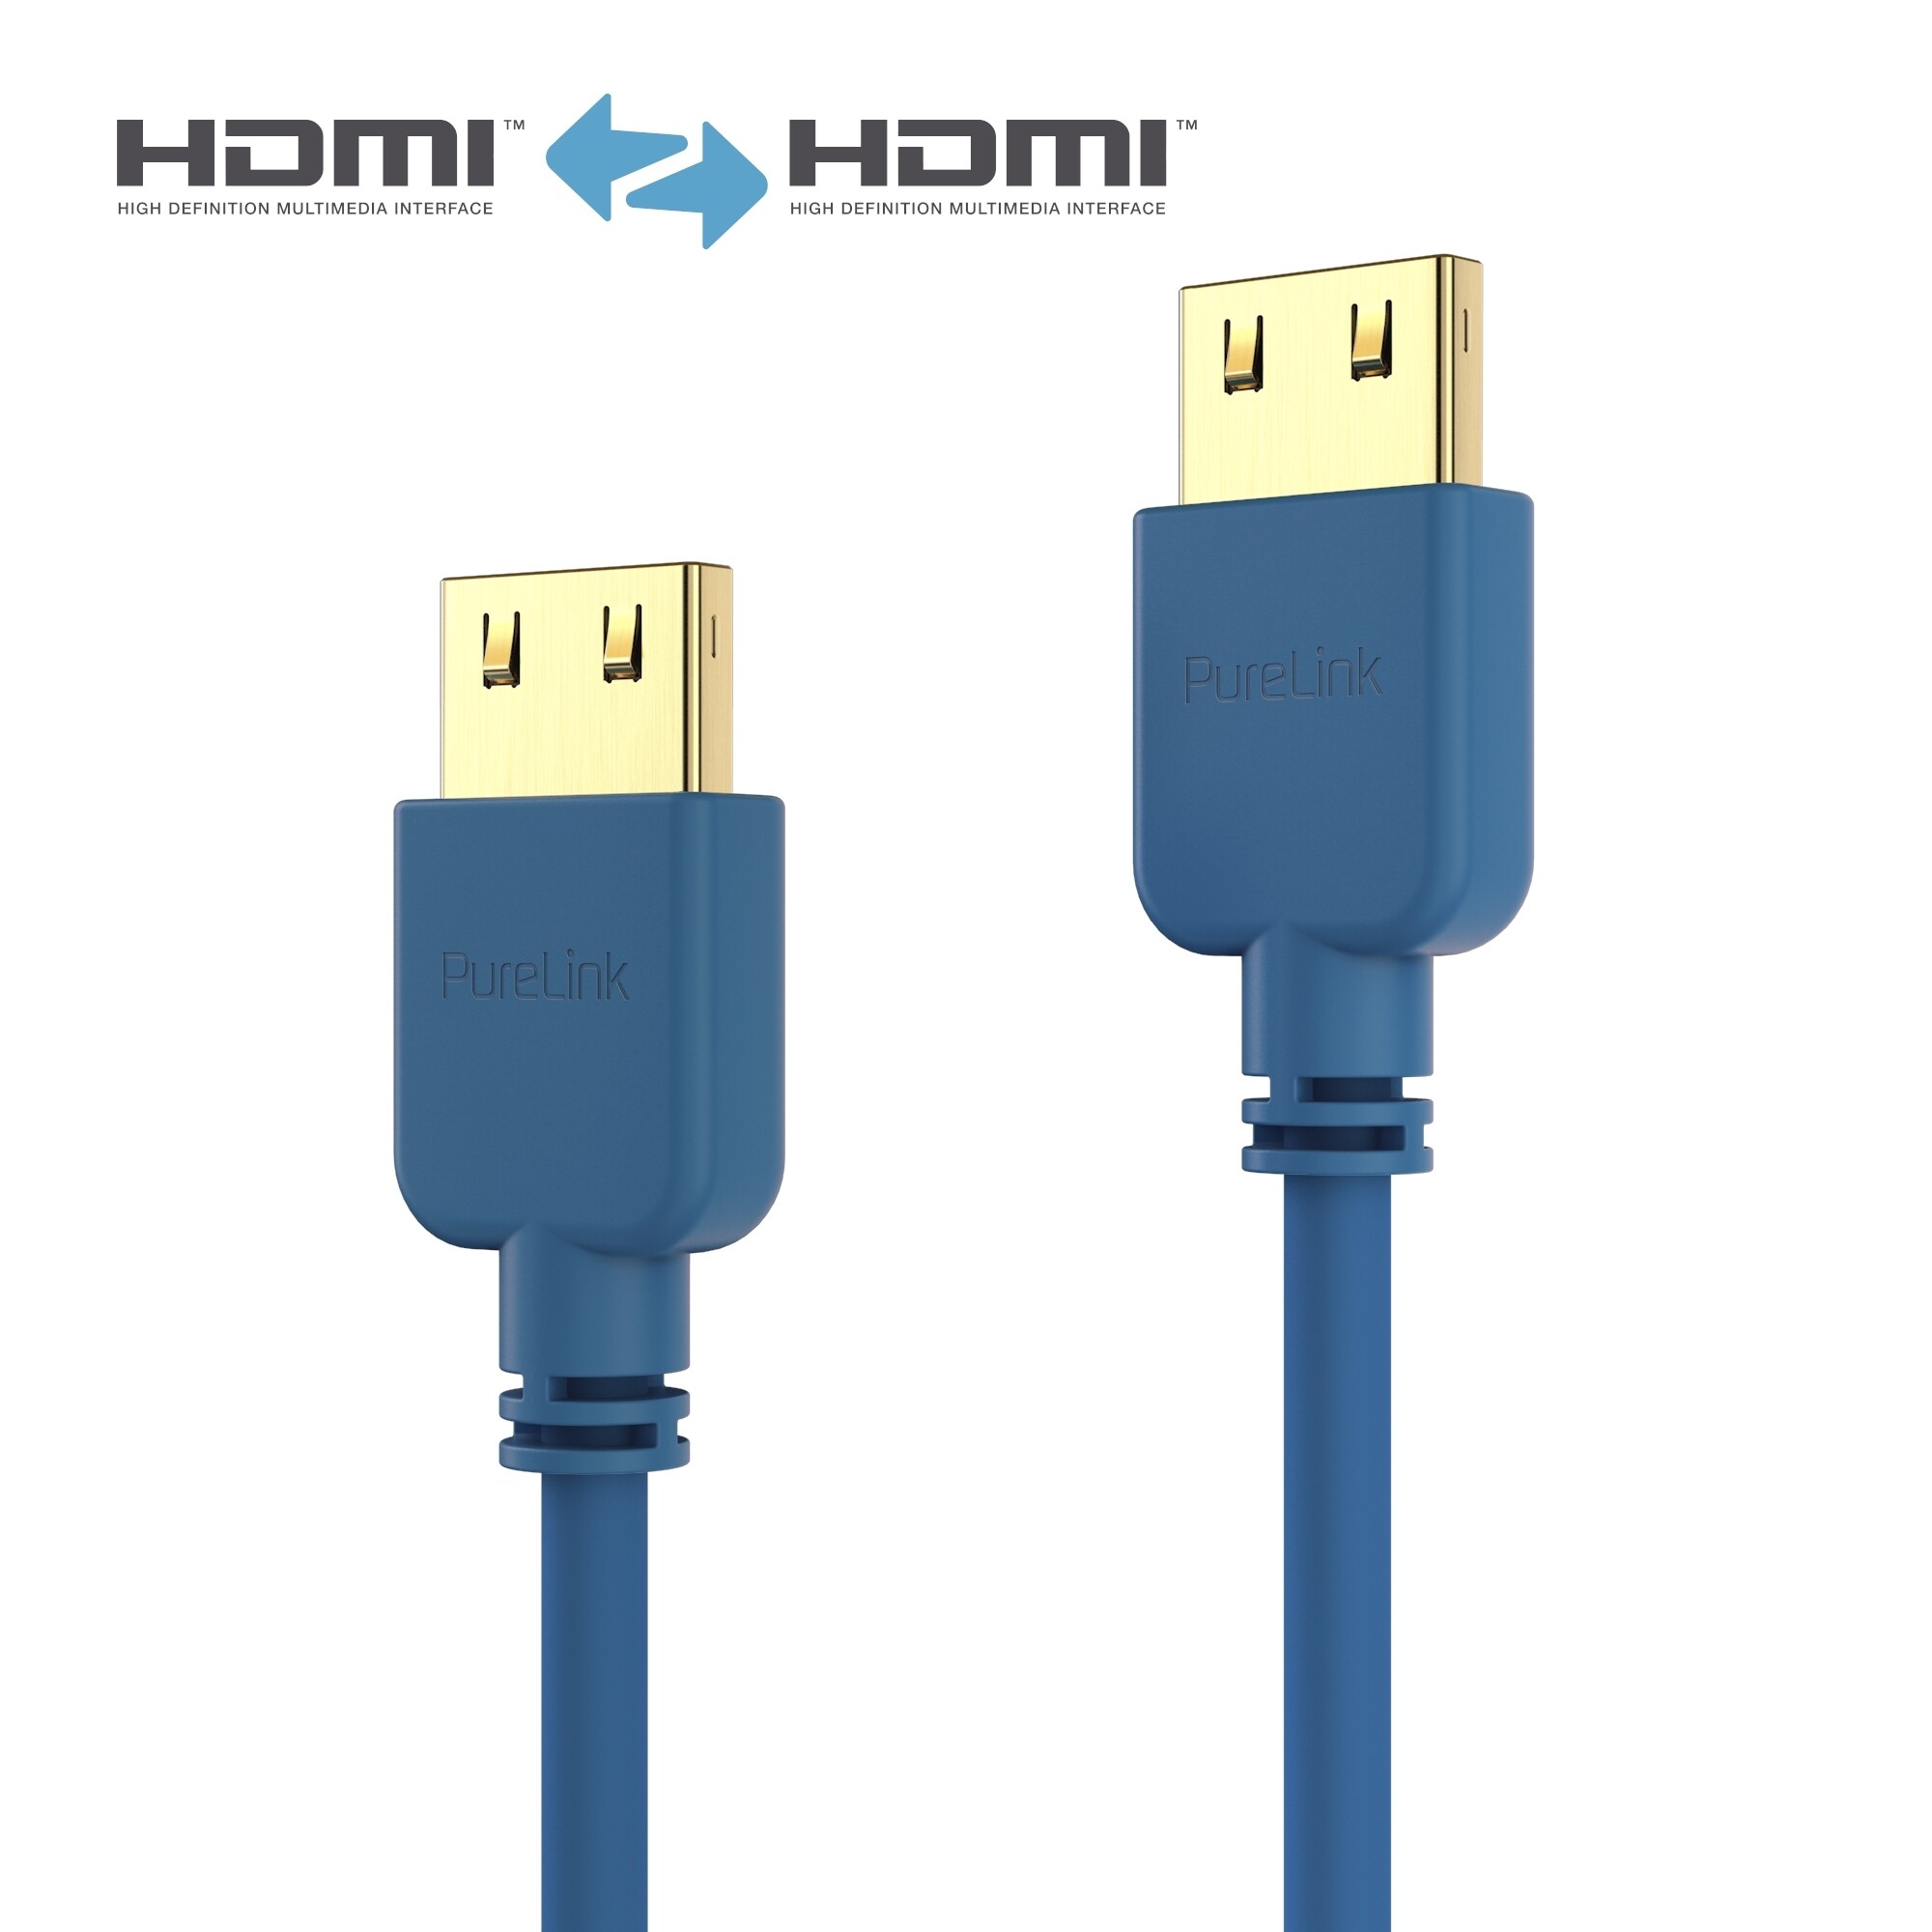 Purelink-PI0502-010-HDMI-Kabel-SuperThin-1m-blau